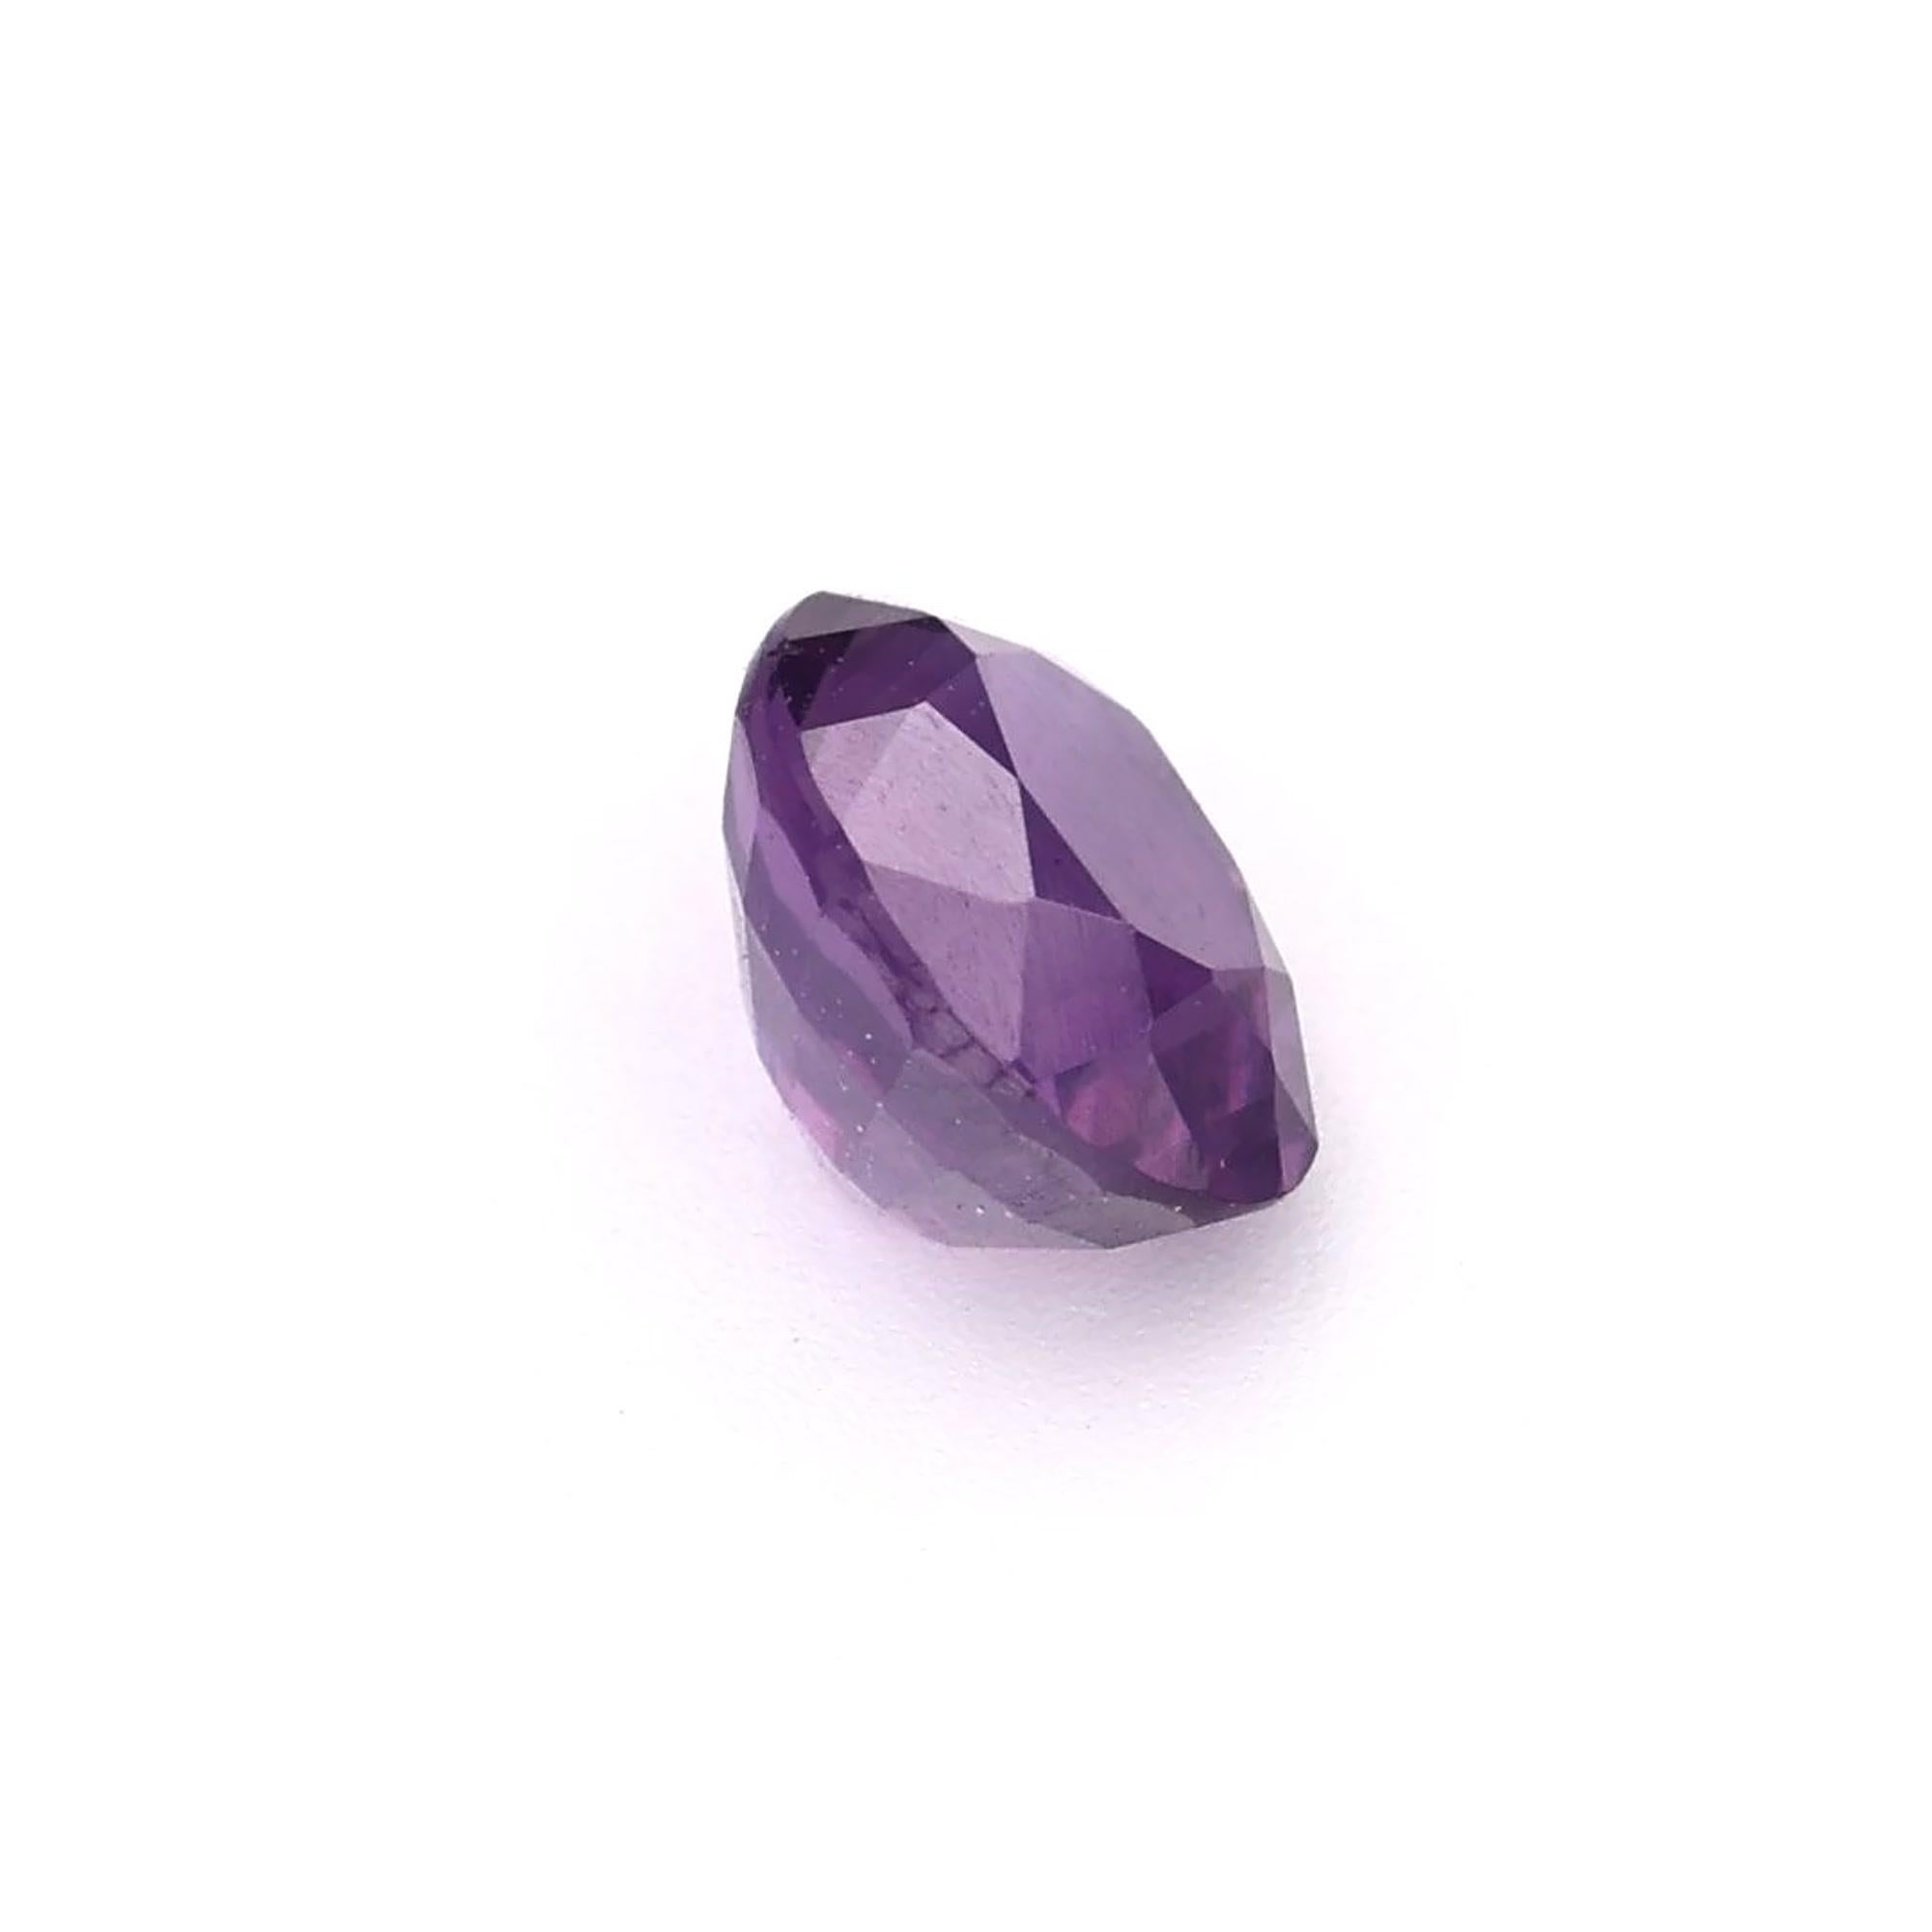 Pierre d'origine de Ceylan, saphir violet de forme ovale certifié 1,35 carat en vente 3